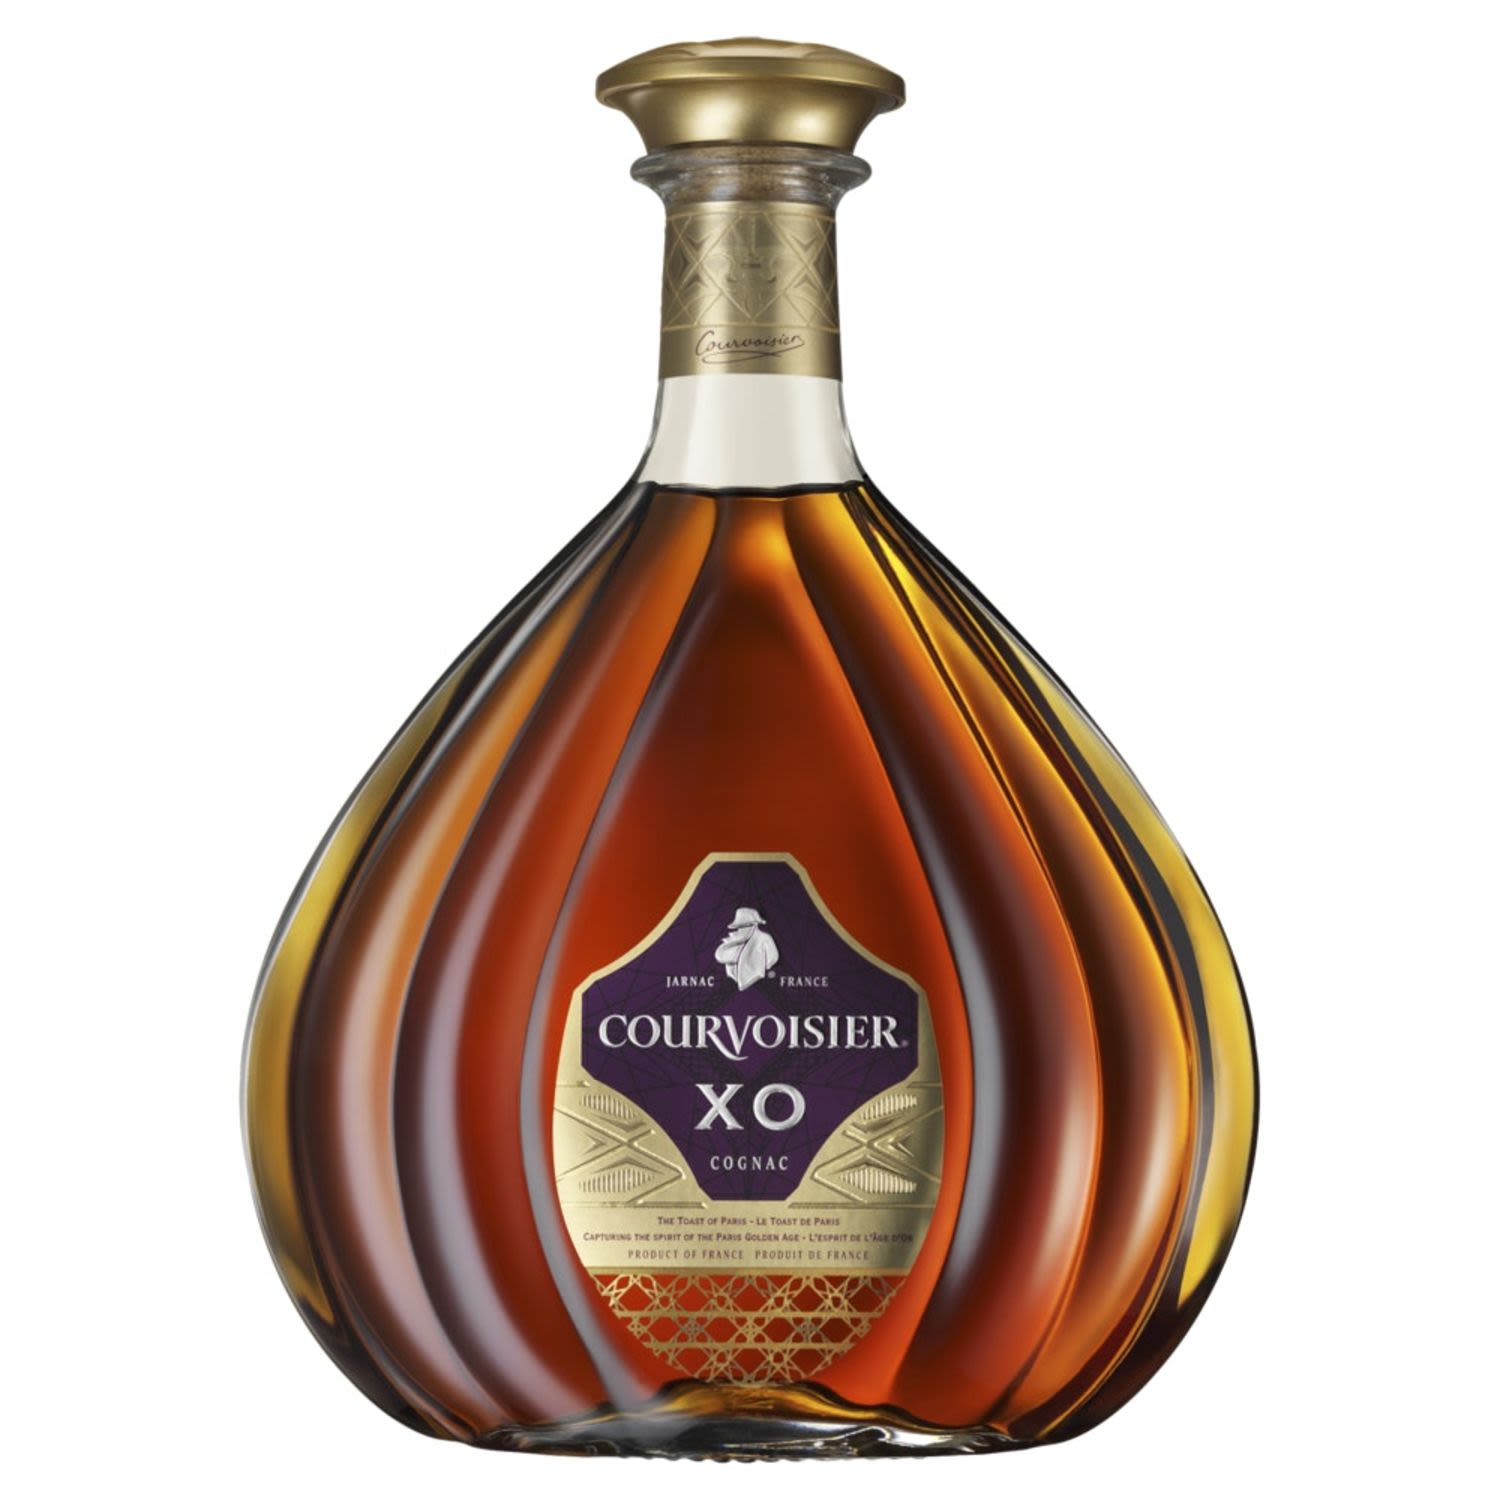 Courvoisier Cognac XO 700mL Bottle